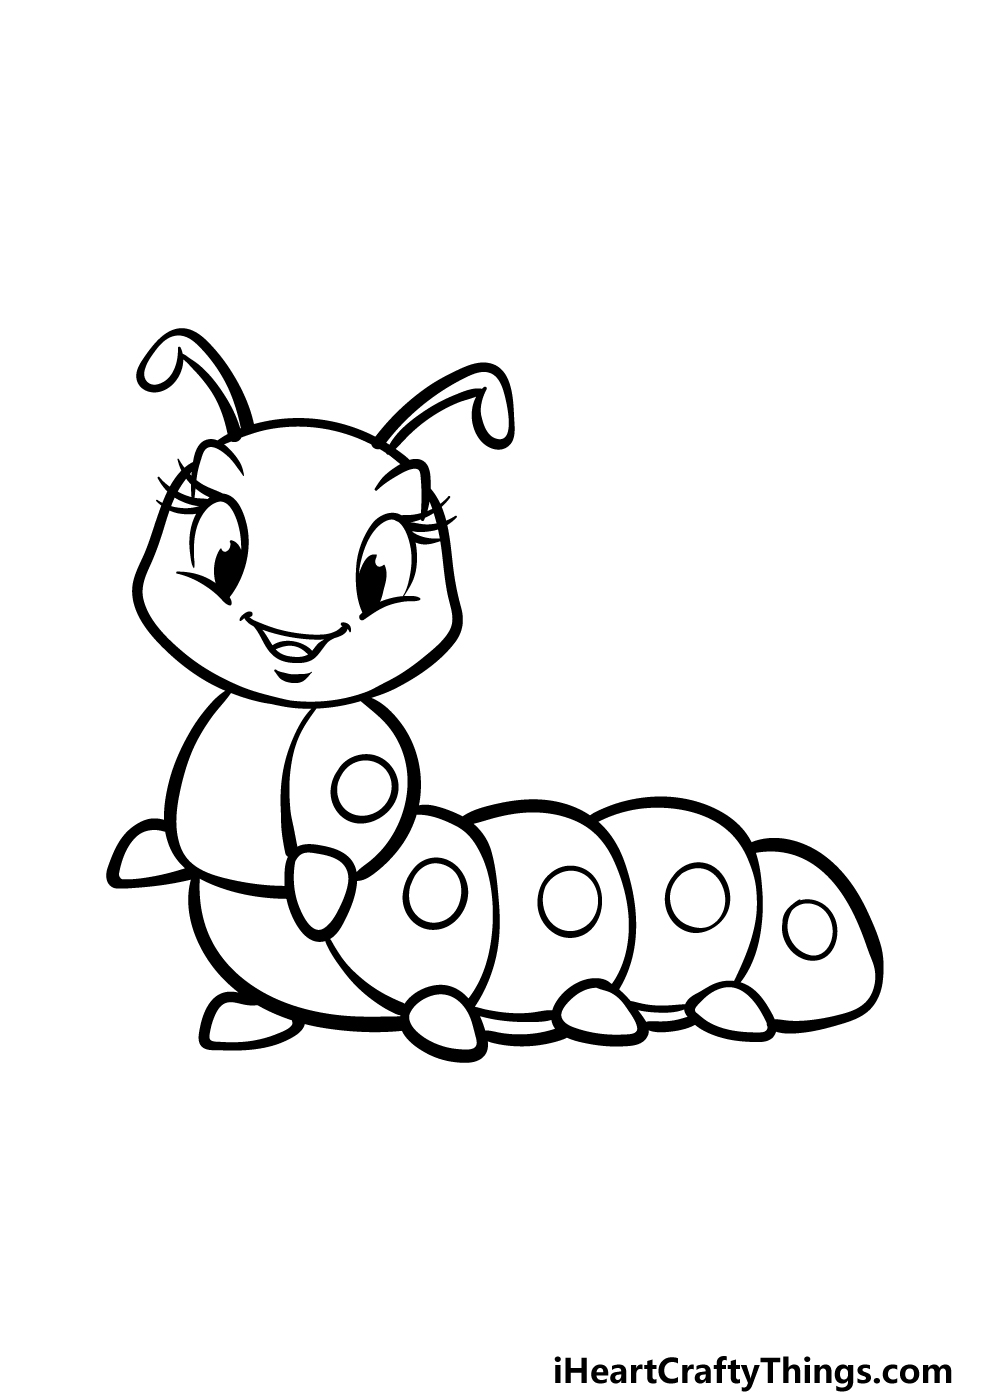 how to draw a cartoon caterpillar step 4